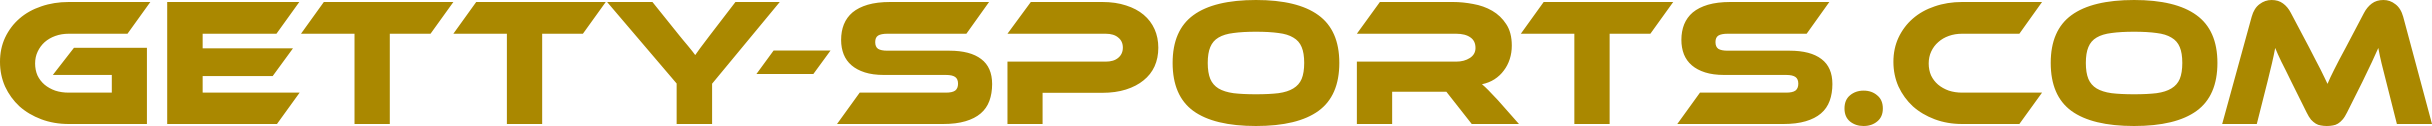 GETTY-SPORTS.com-Logo